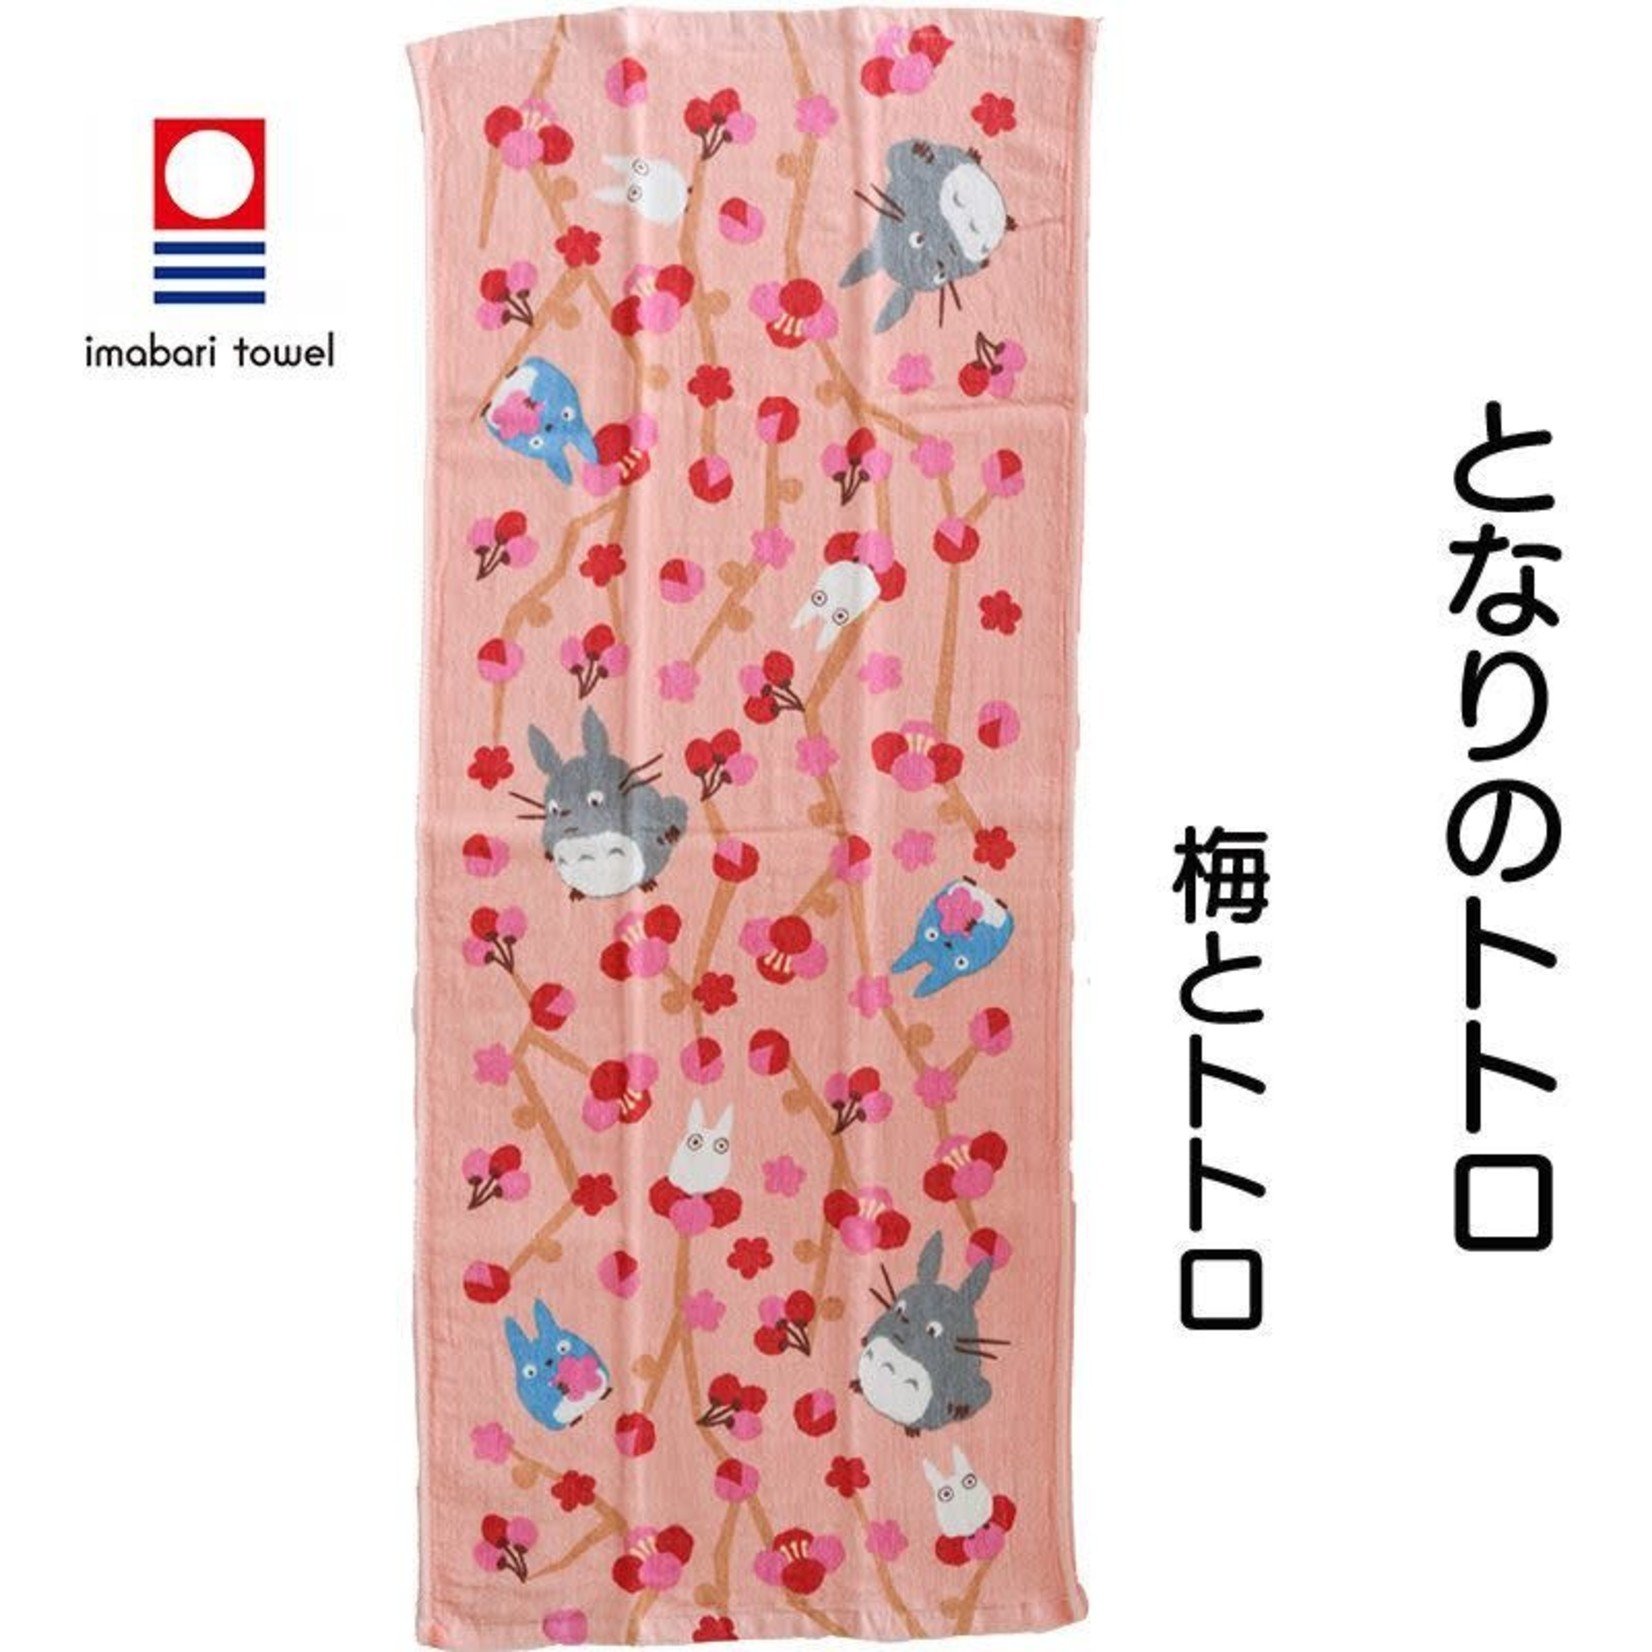 imabari towel Totoro & Ume Towel